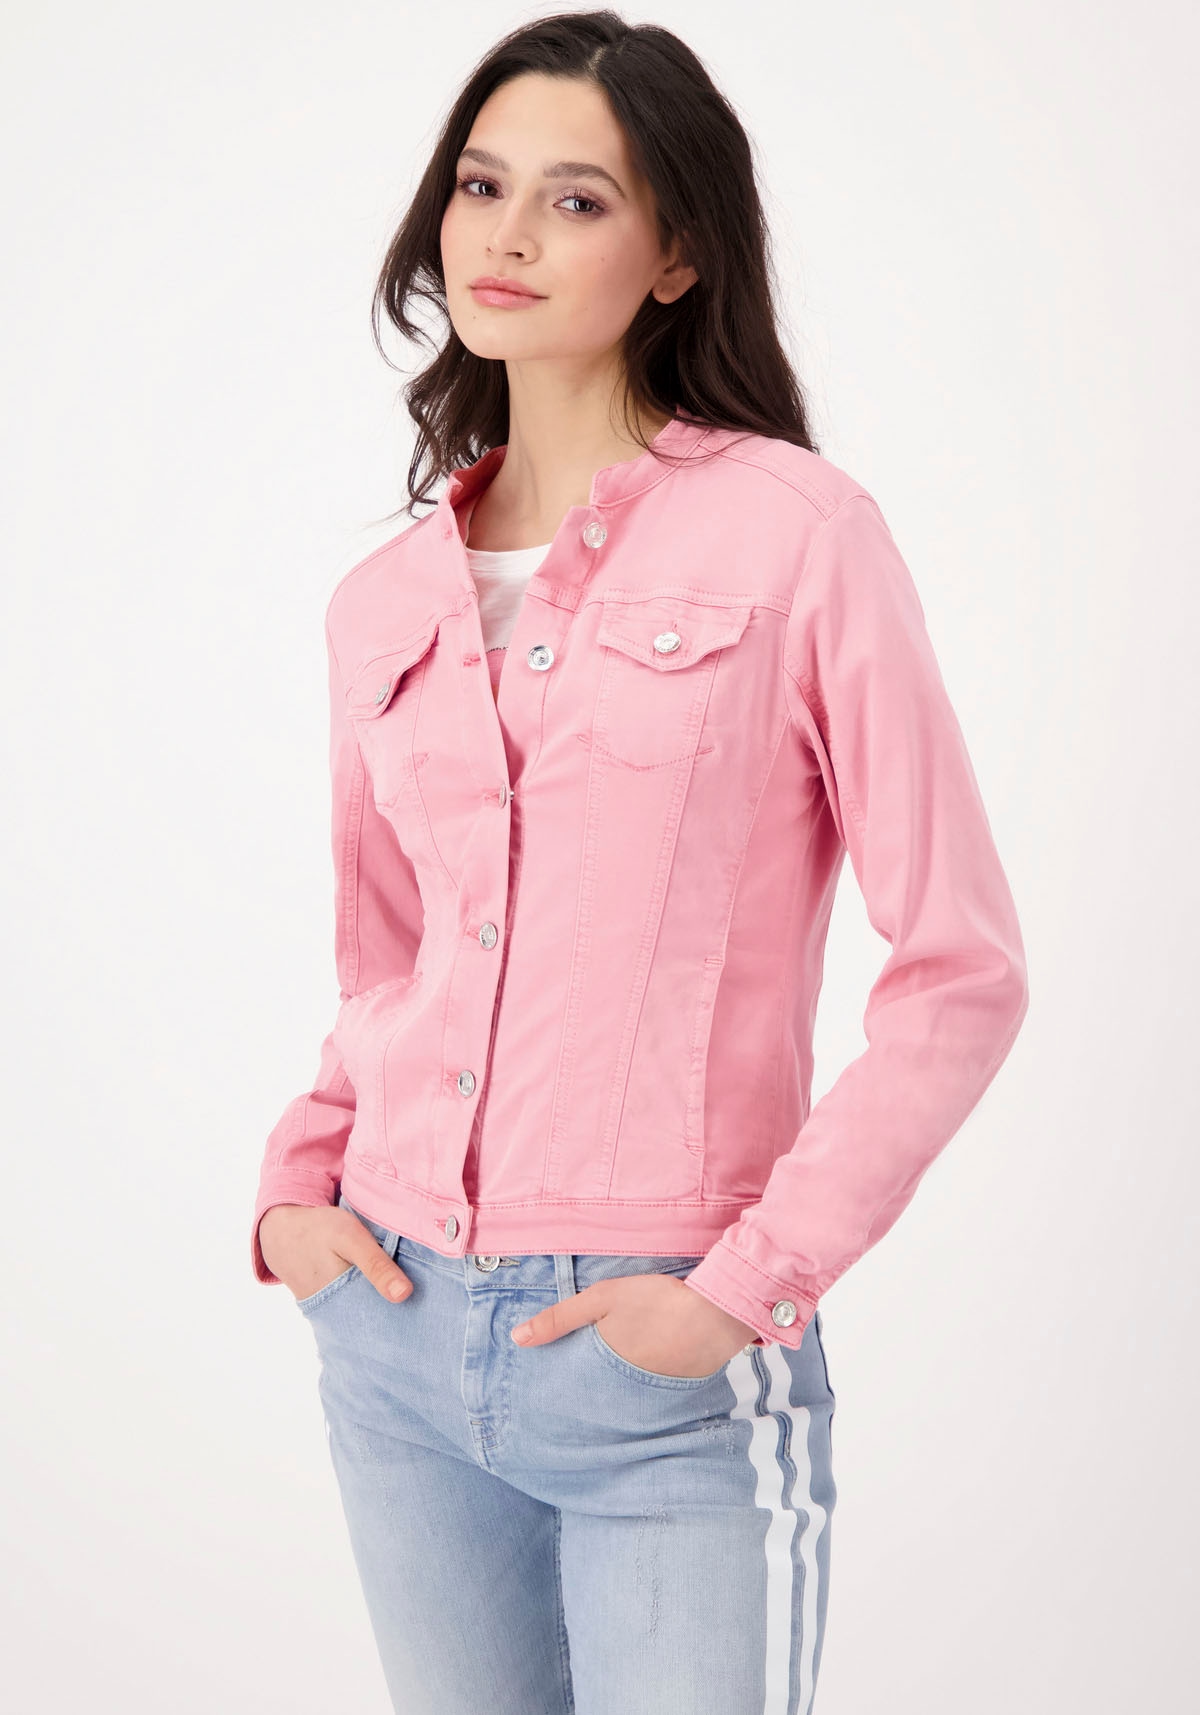 Jeansjacken Damen rosa online kaufen I\'m walking »